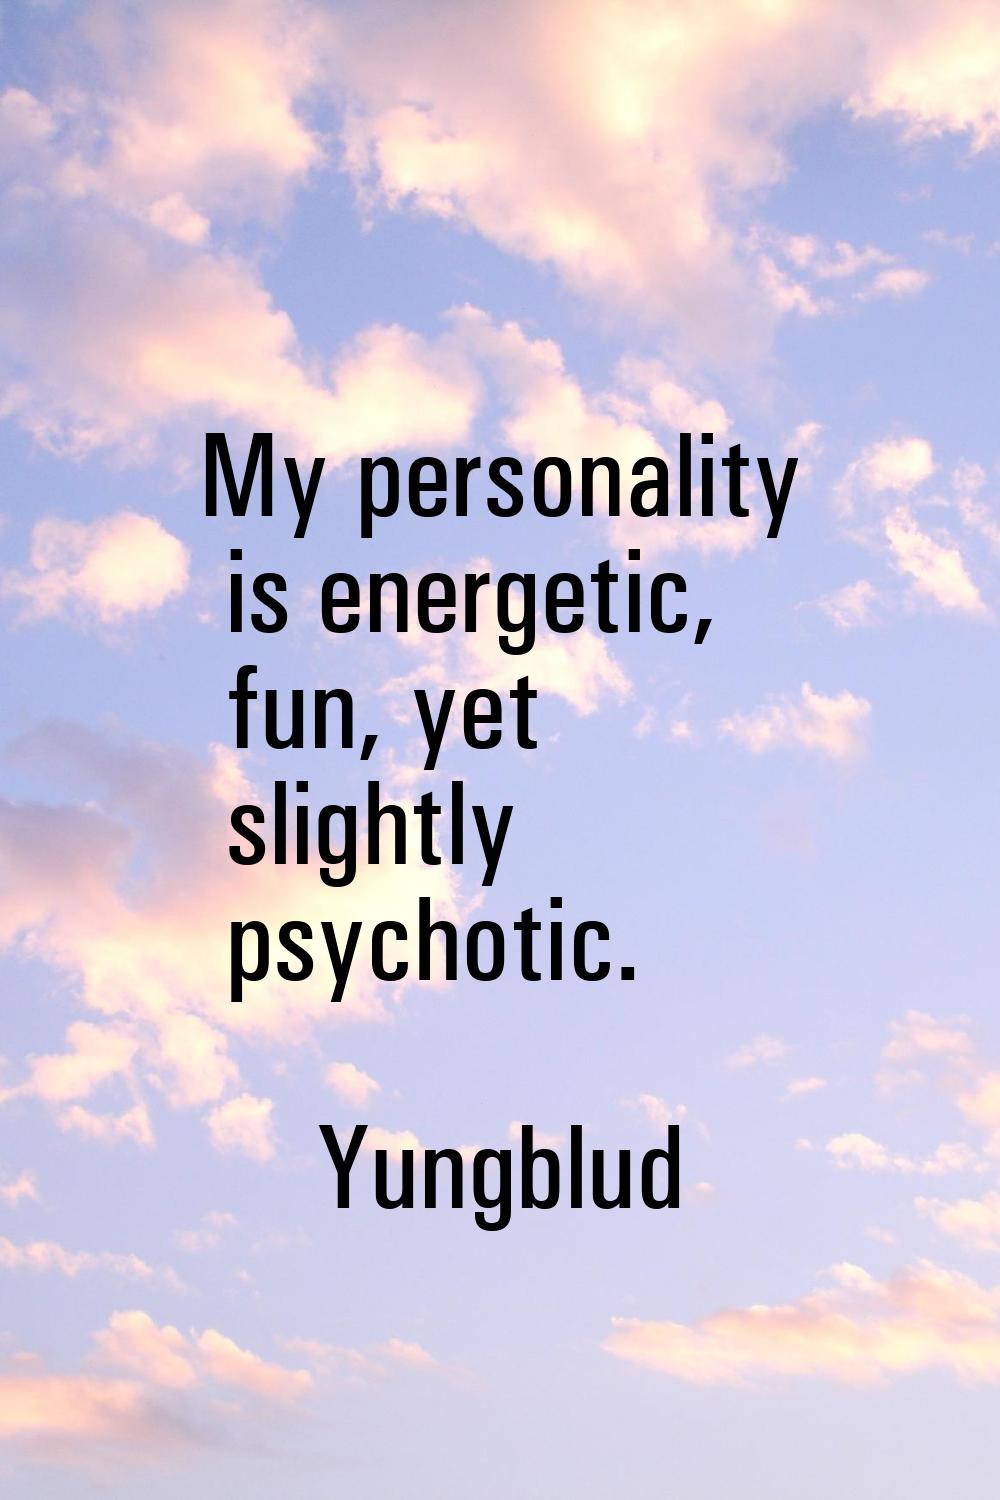 My personality is energetic, fun, yet slightly psychotic.